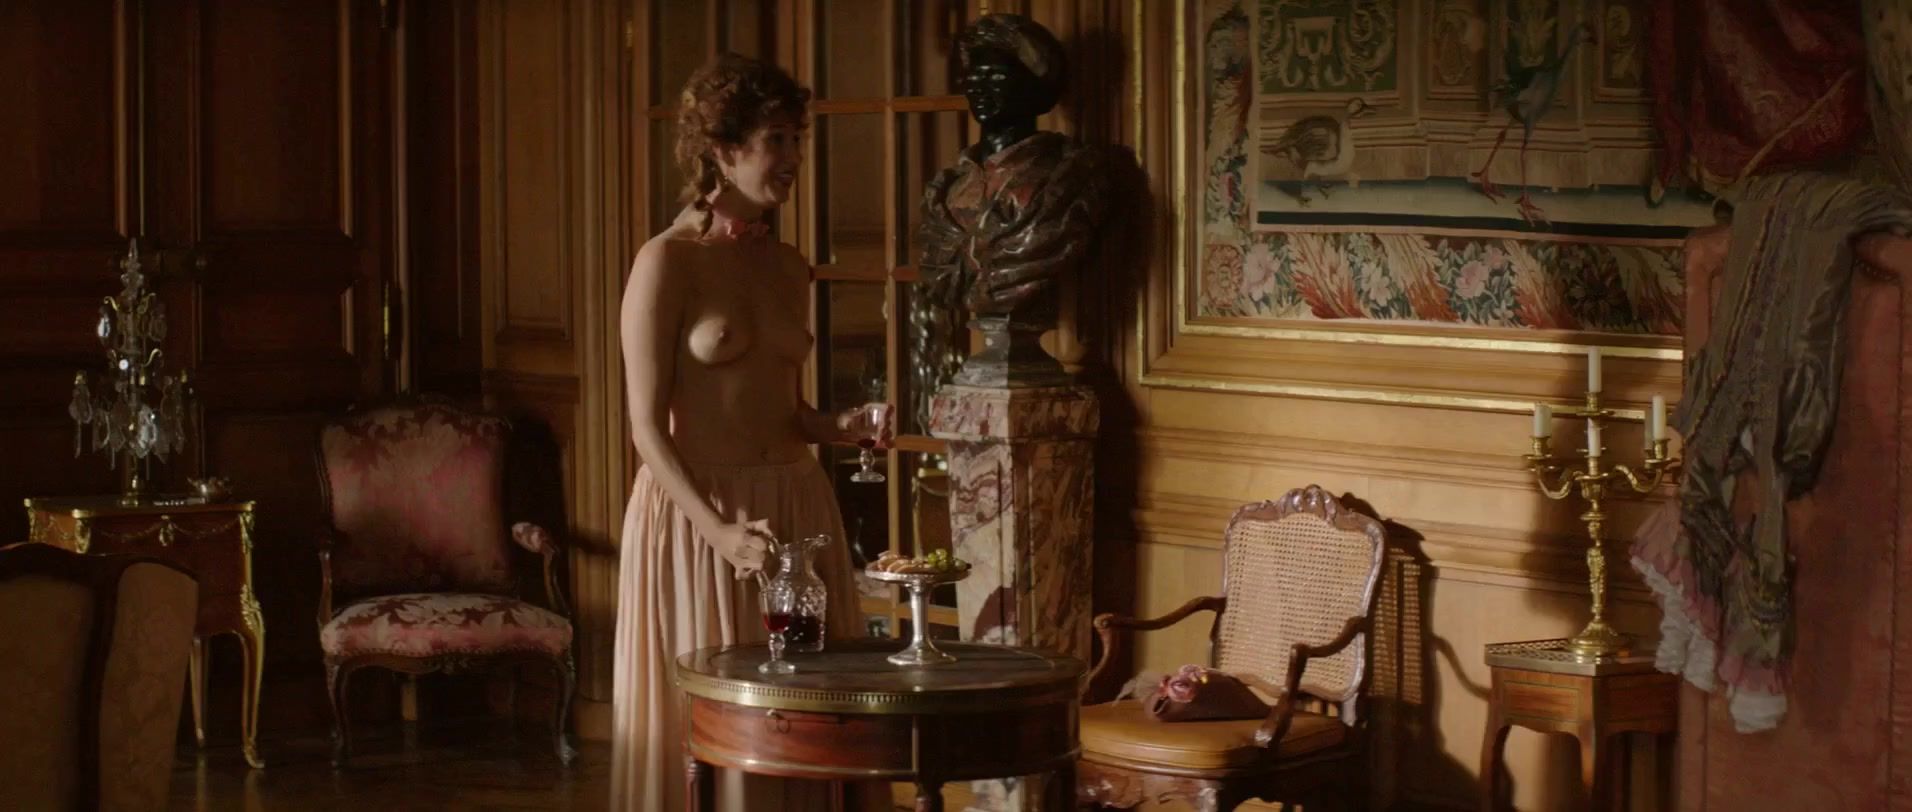 Big Cock Manon Kneuse naked - Mademoiselle de Joncquieres (2018) Spreading